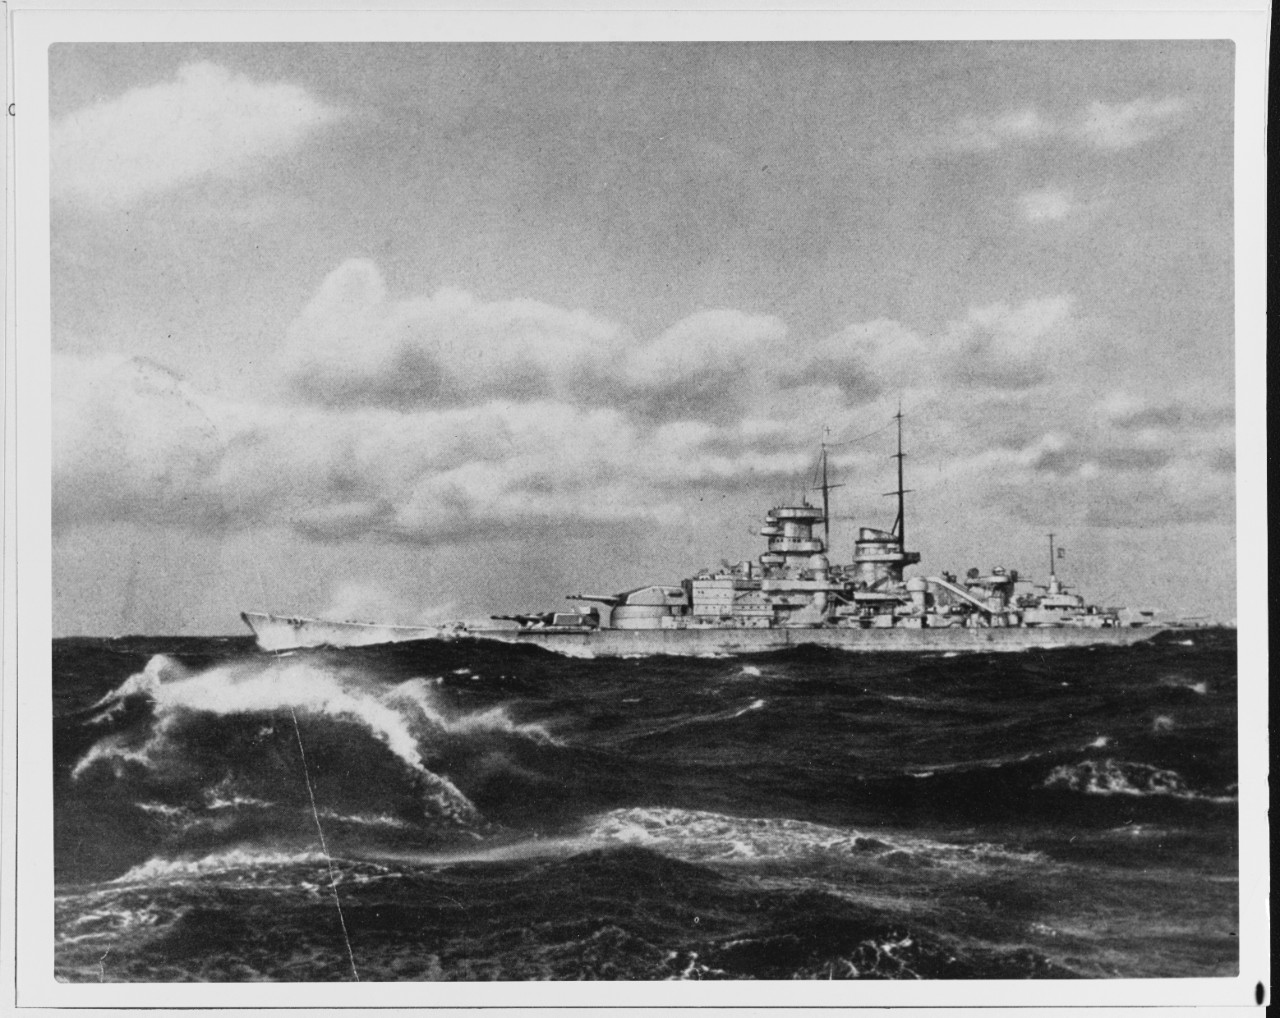 "German Battleship in the Atlantic"